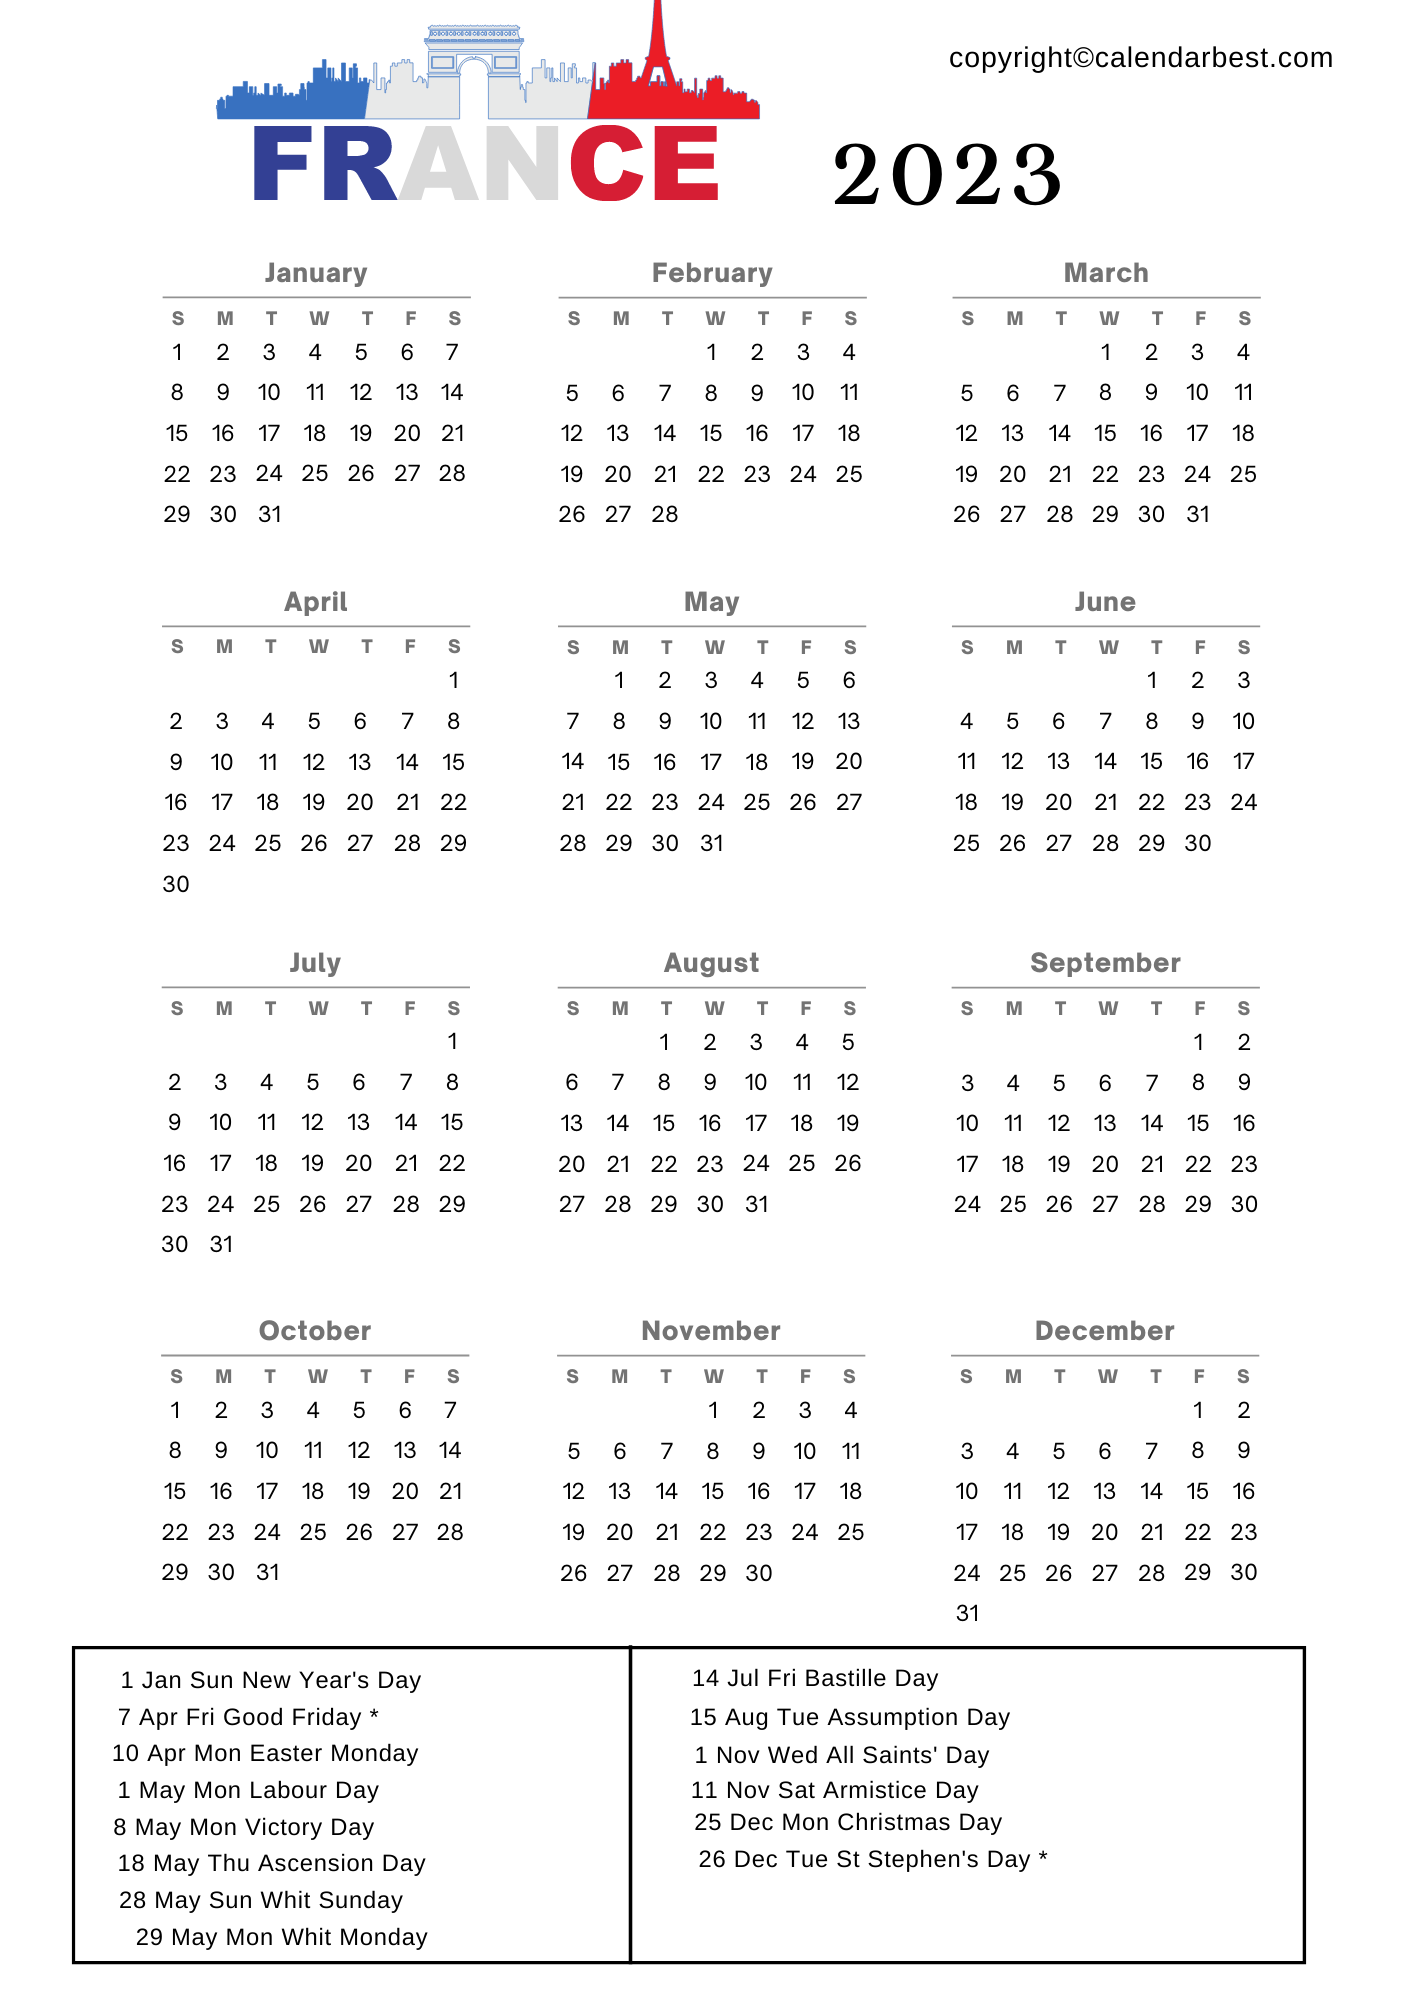 France Holidays 2023 2023 Calendar